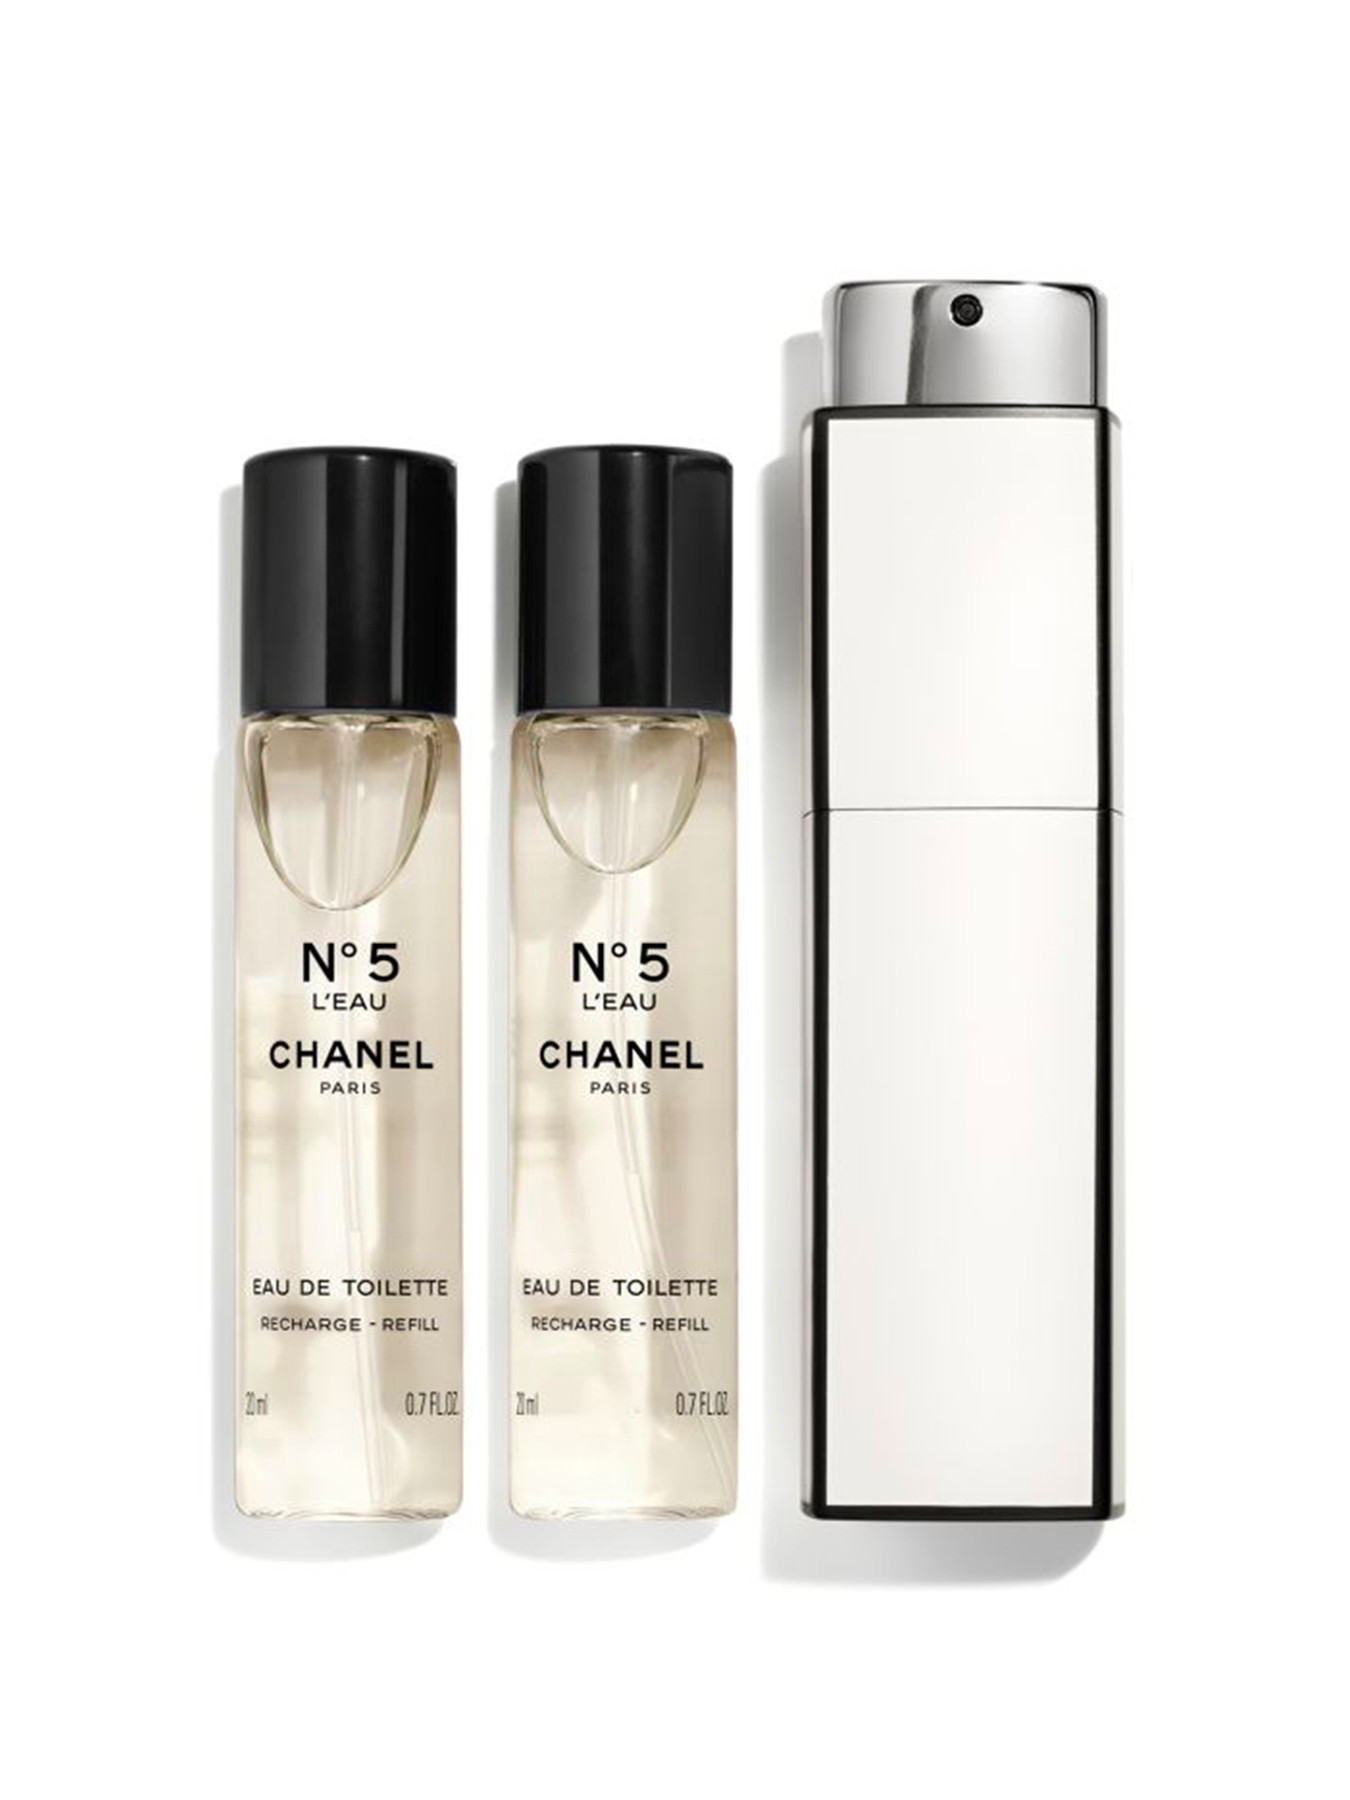 Chanel N°5 L'eau Eau De Toilette Twist And Spray 3x20ml